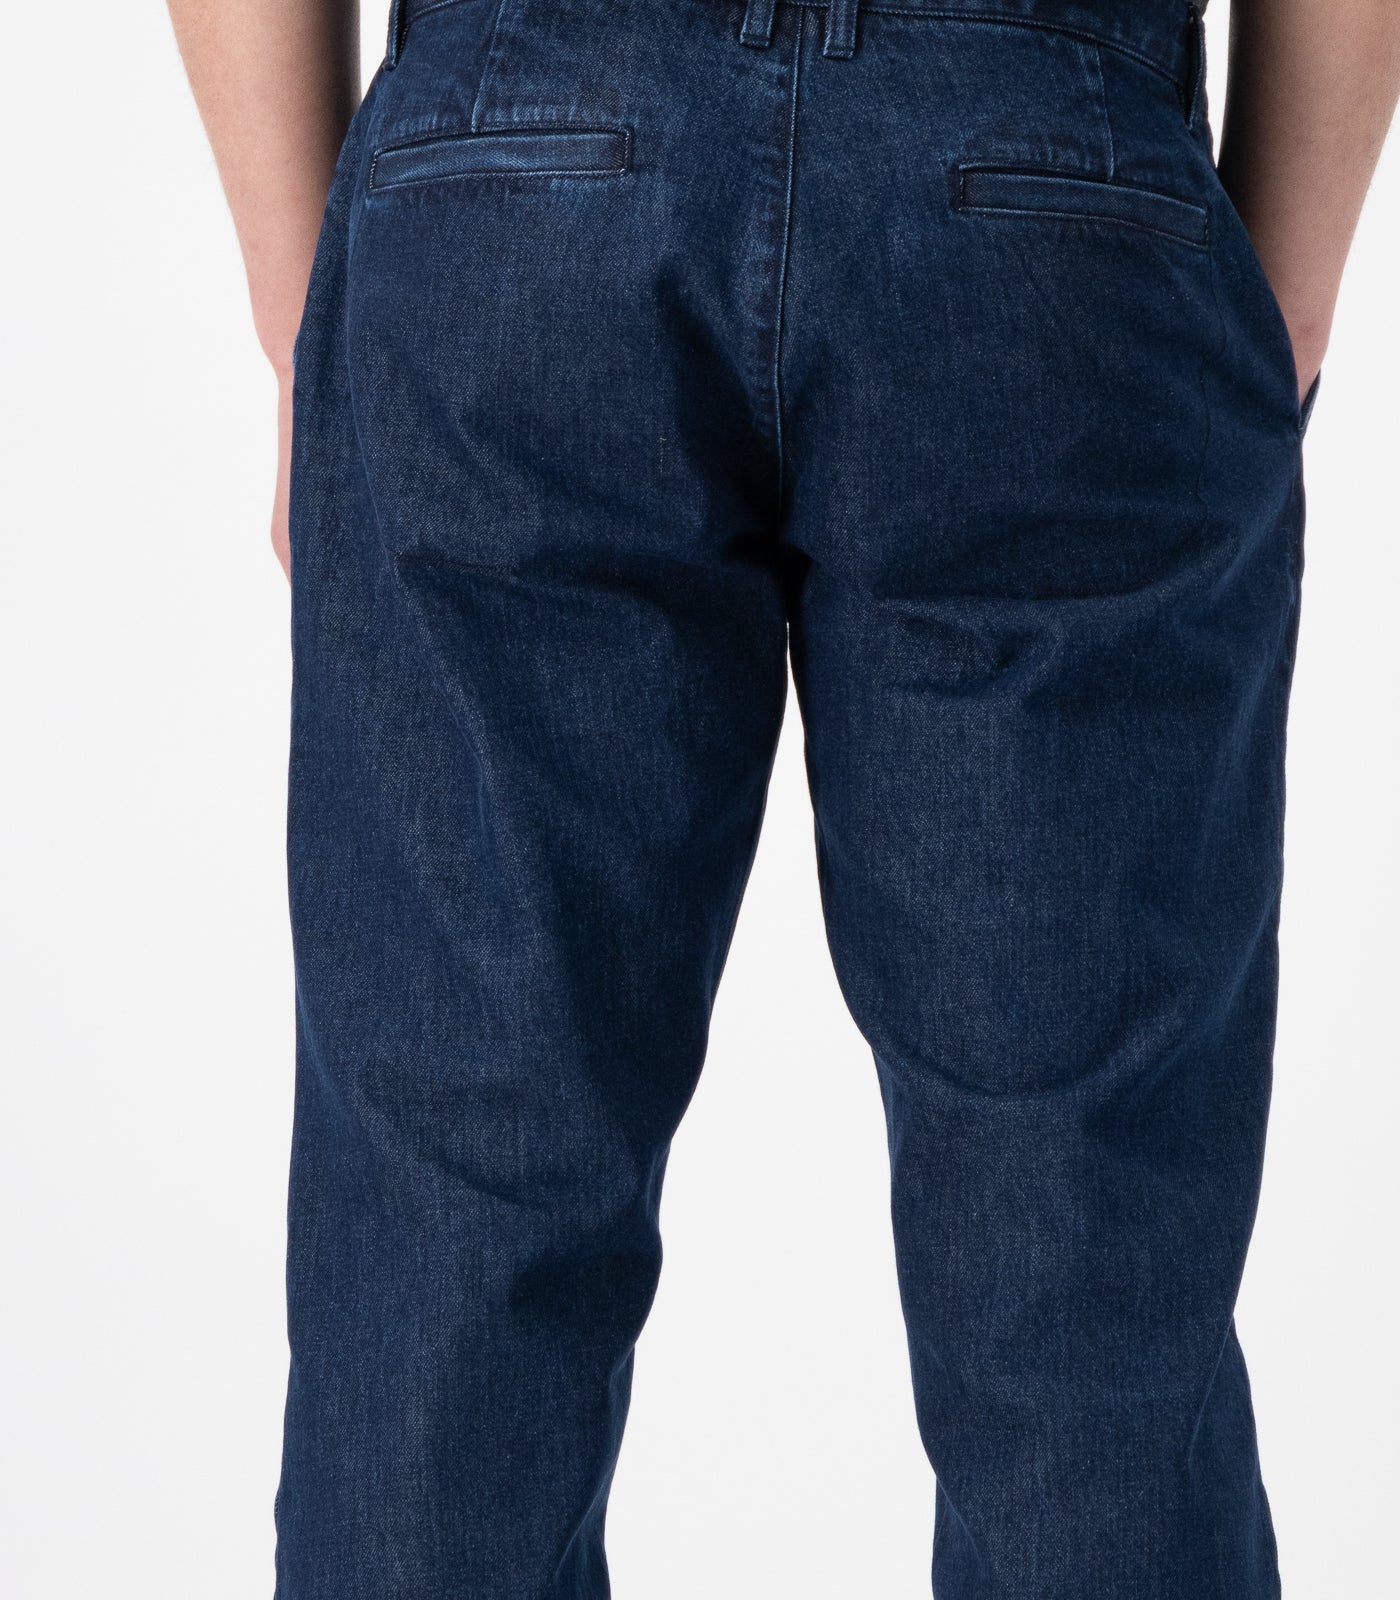 Bhumi Organic Cotton - Men's Jeans- Denim